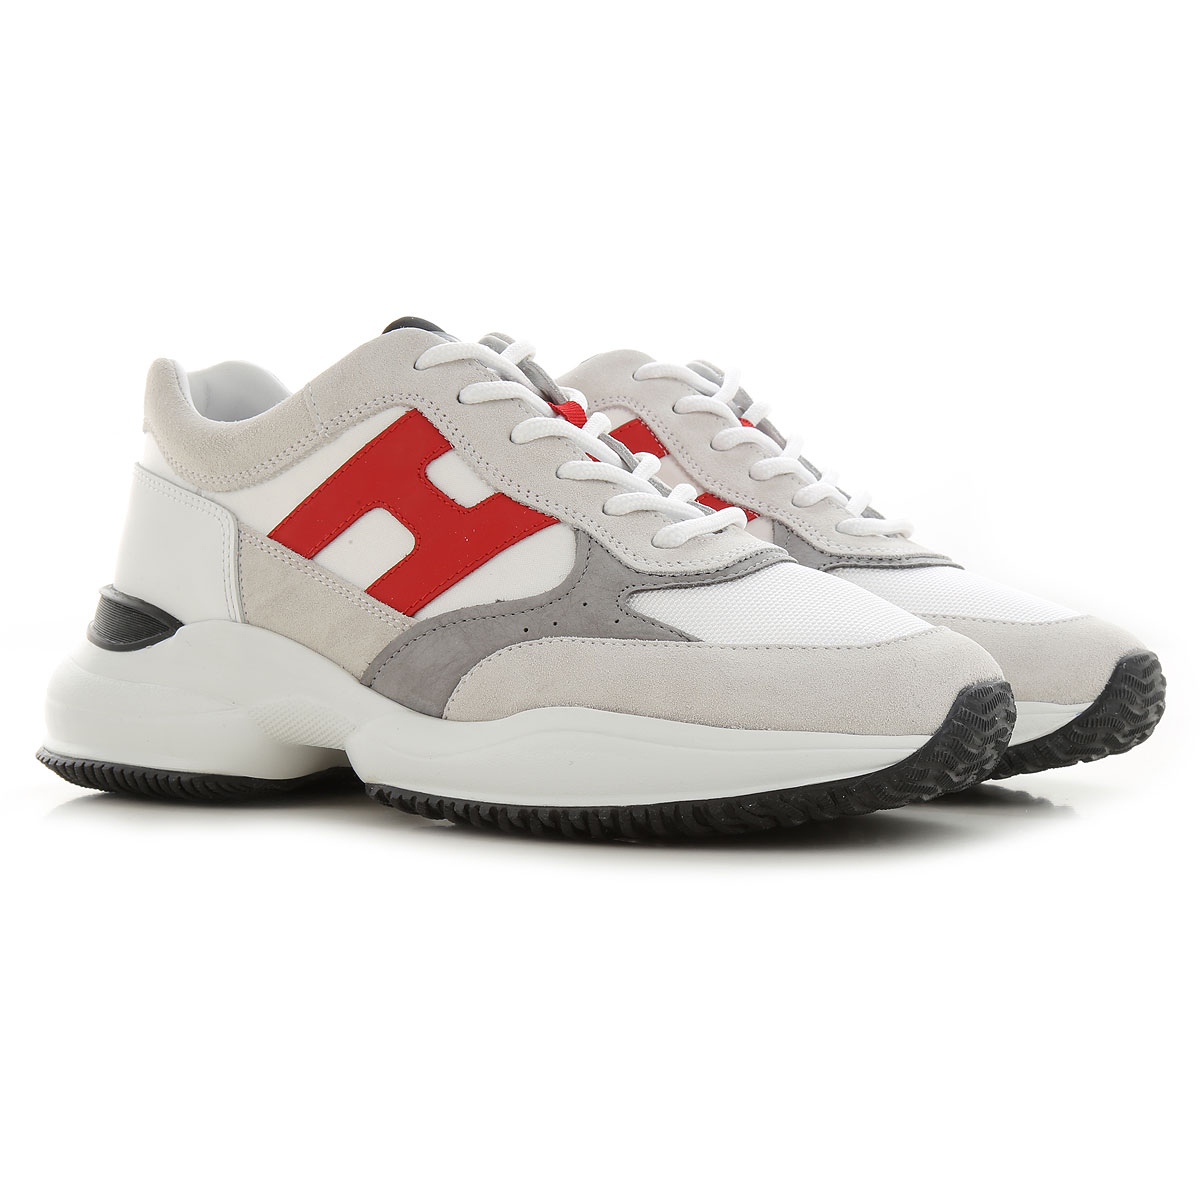 Mens Shoes Hogan, Style code: hxm5450dn90pnx615g--